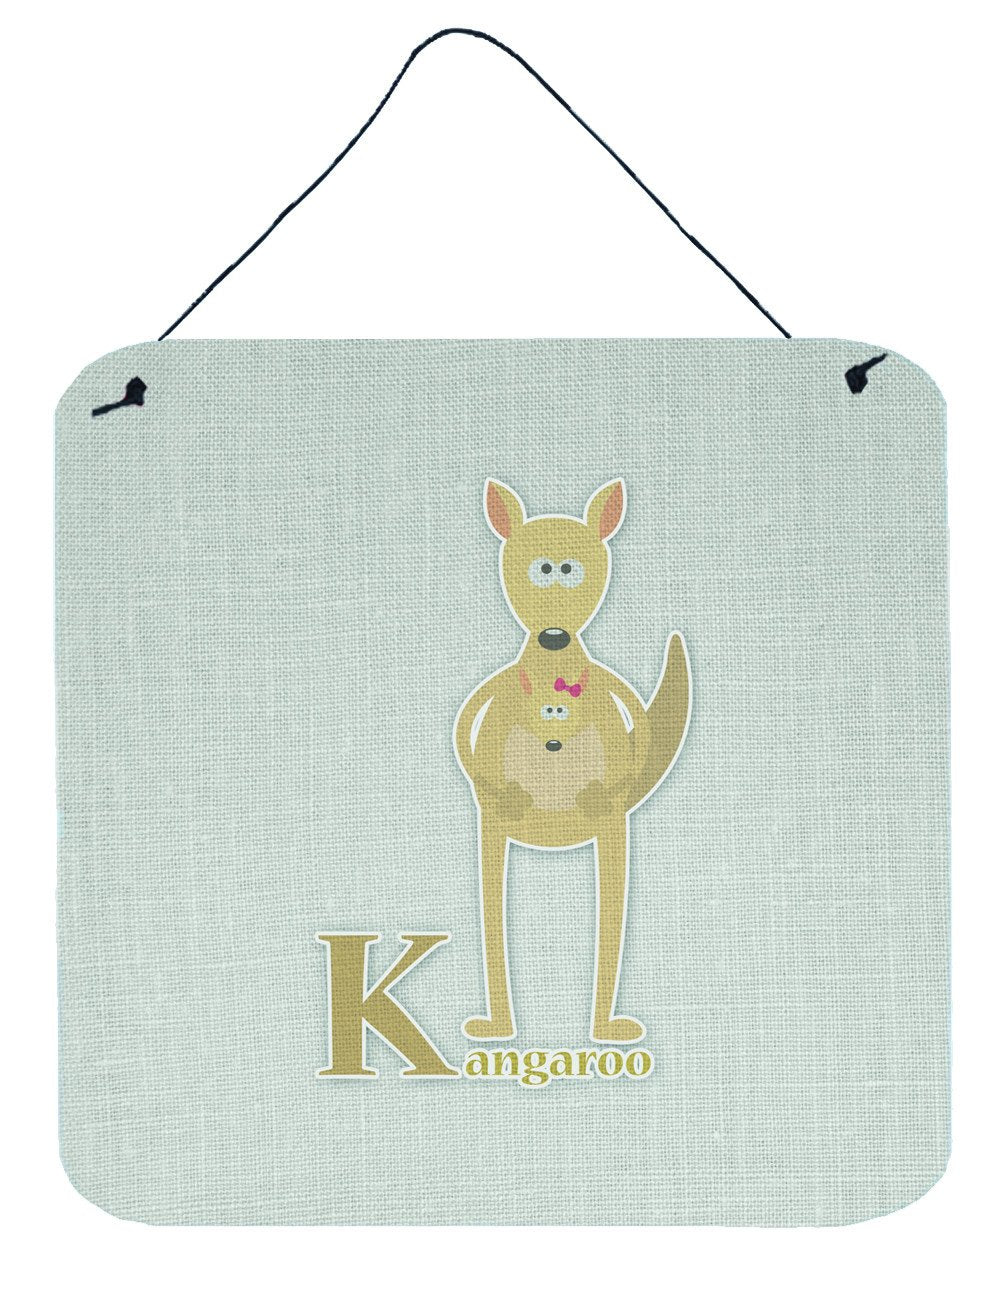 Alphabet K for Kangaroo Wall or Door Hanging Prints BB5736DS66 by Caroline's Treasures